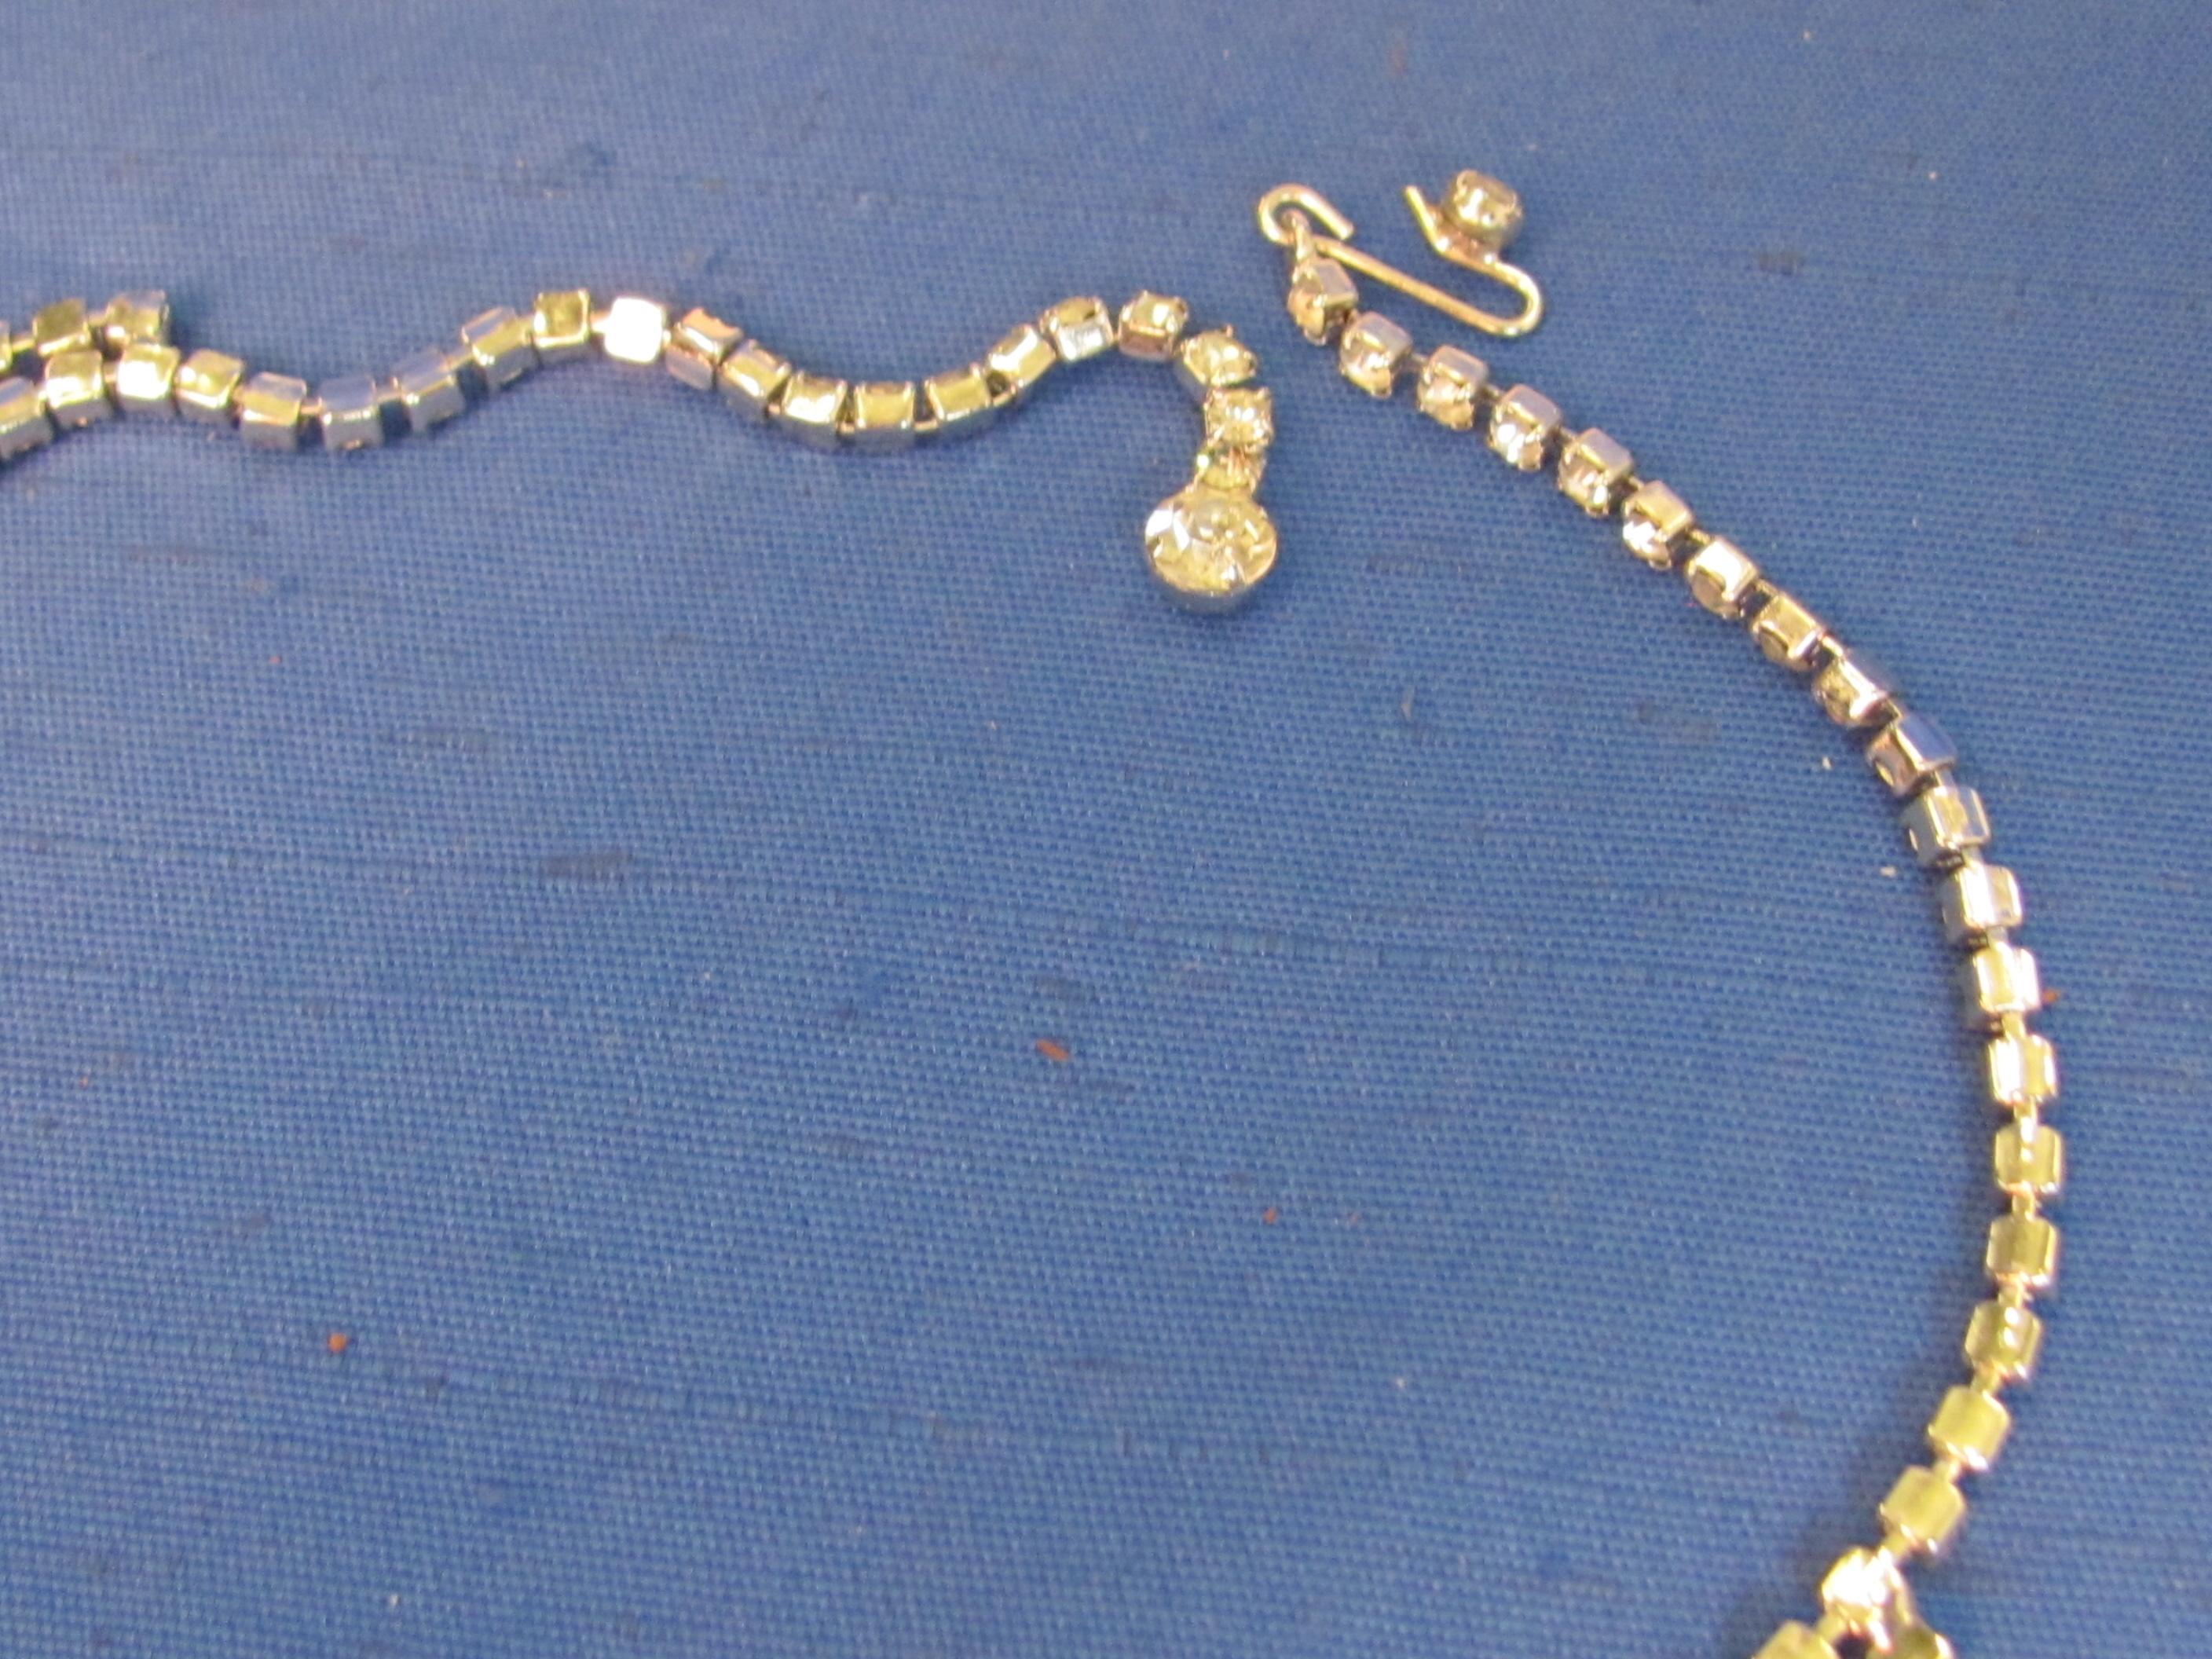 Black & White Rhinestone Necklace & Clip-on Earrings Set – Original “Bluebird” Case